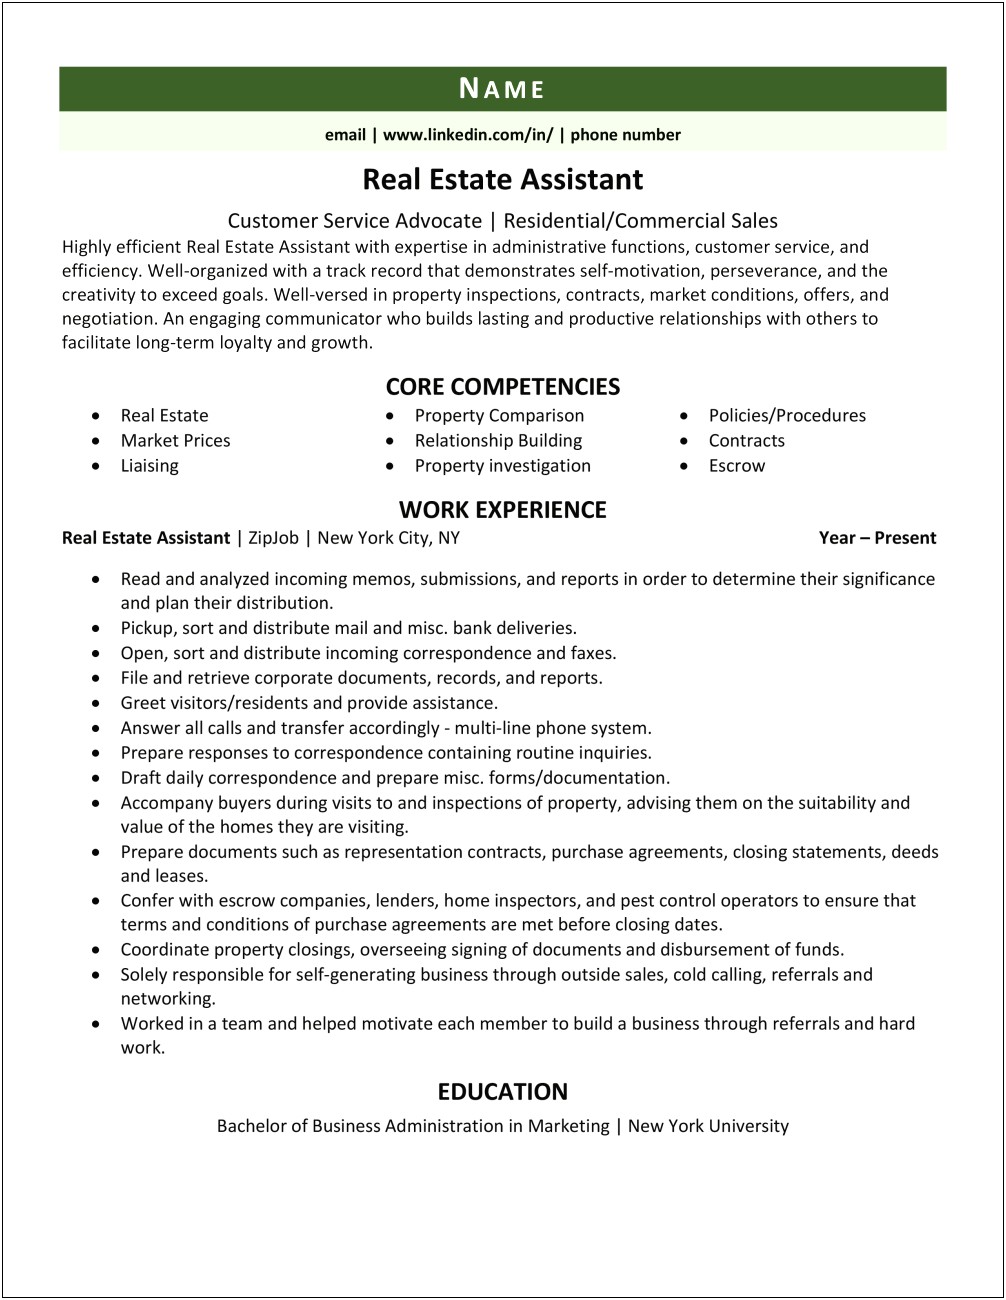 Real Estate Assistant Job Description Resume